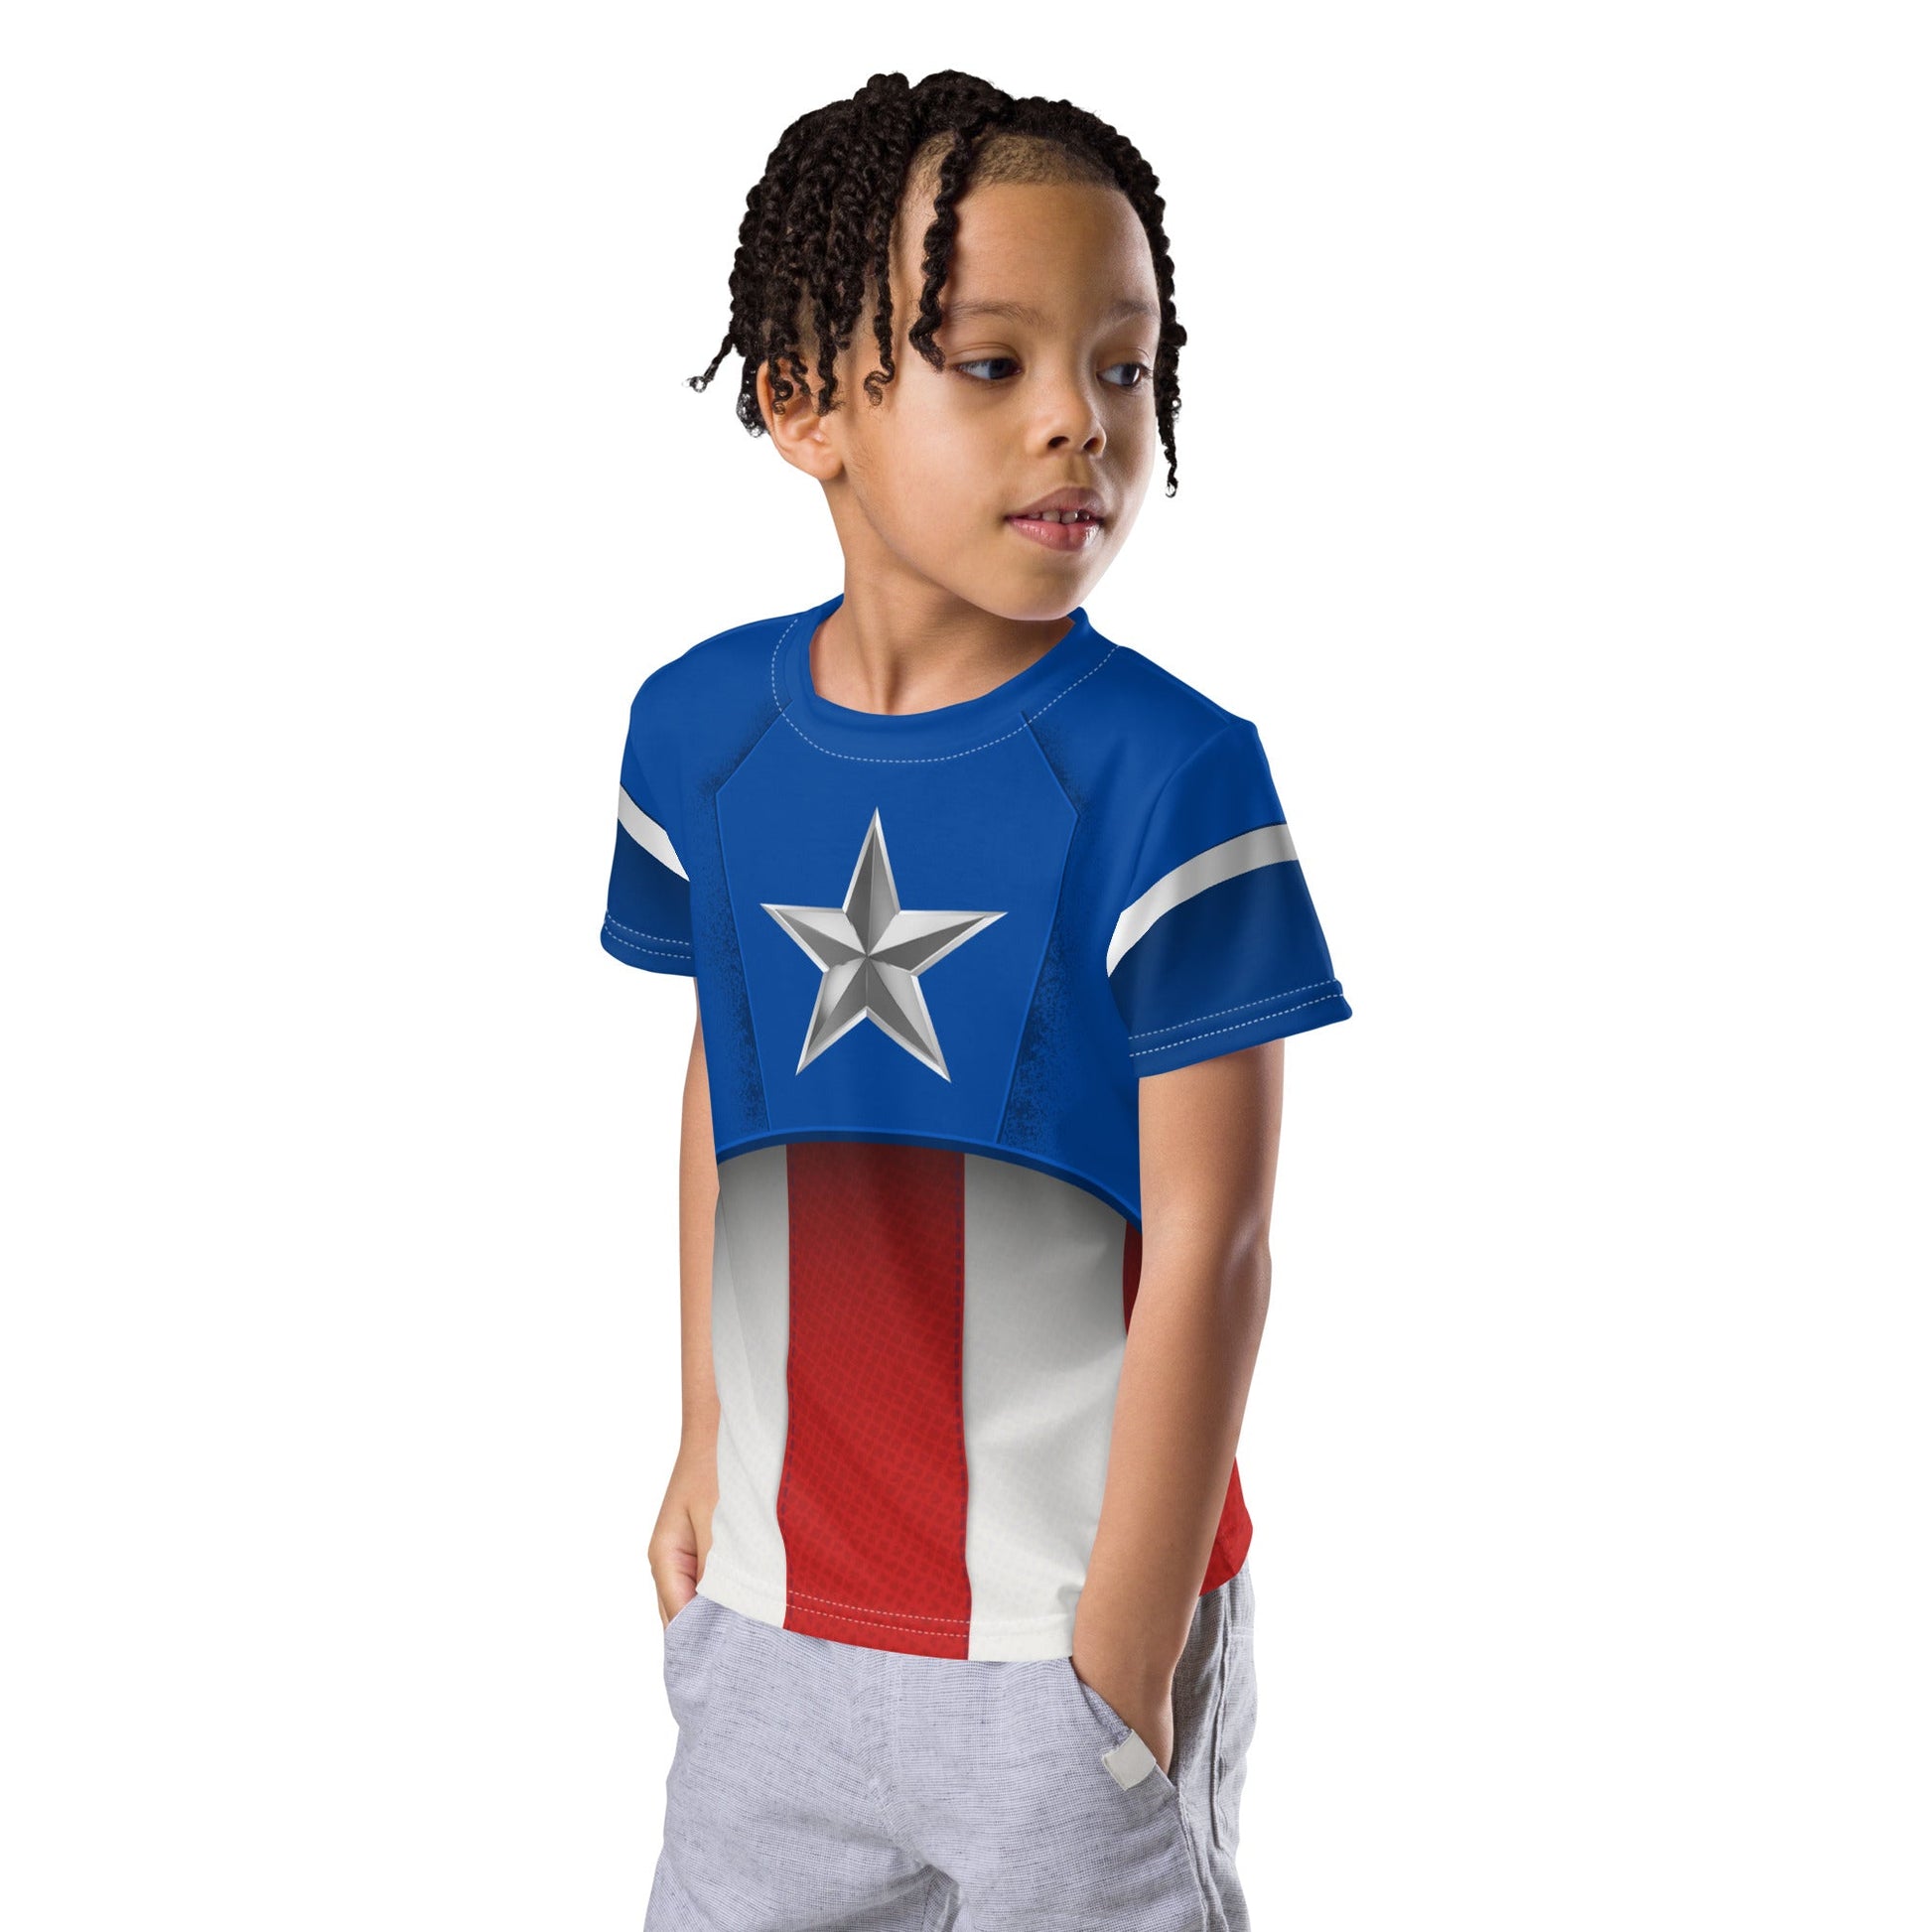 The Captain Kids crew neck t-shirt avengerscalifornia adventurecaptain america#tag4##tag5##tag6#